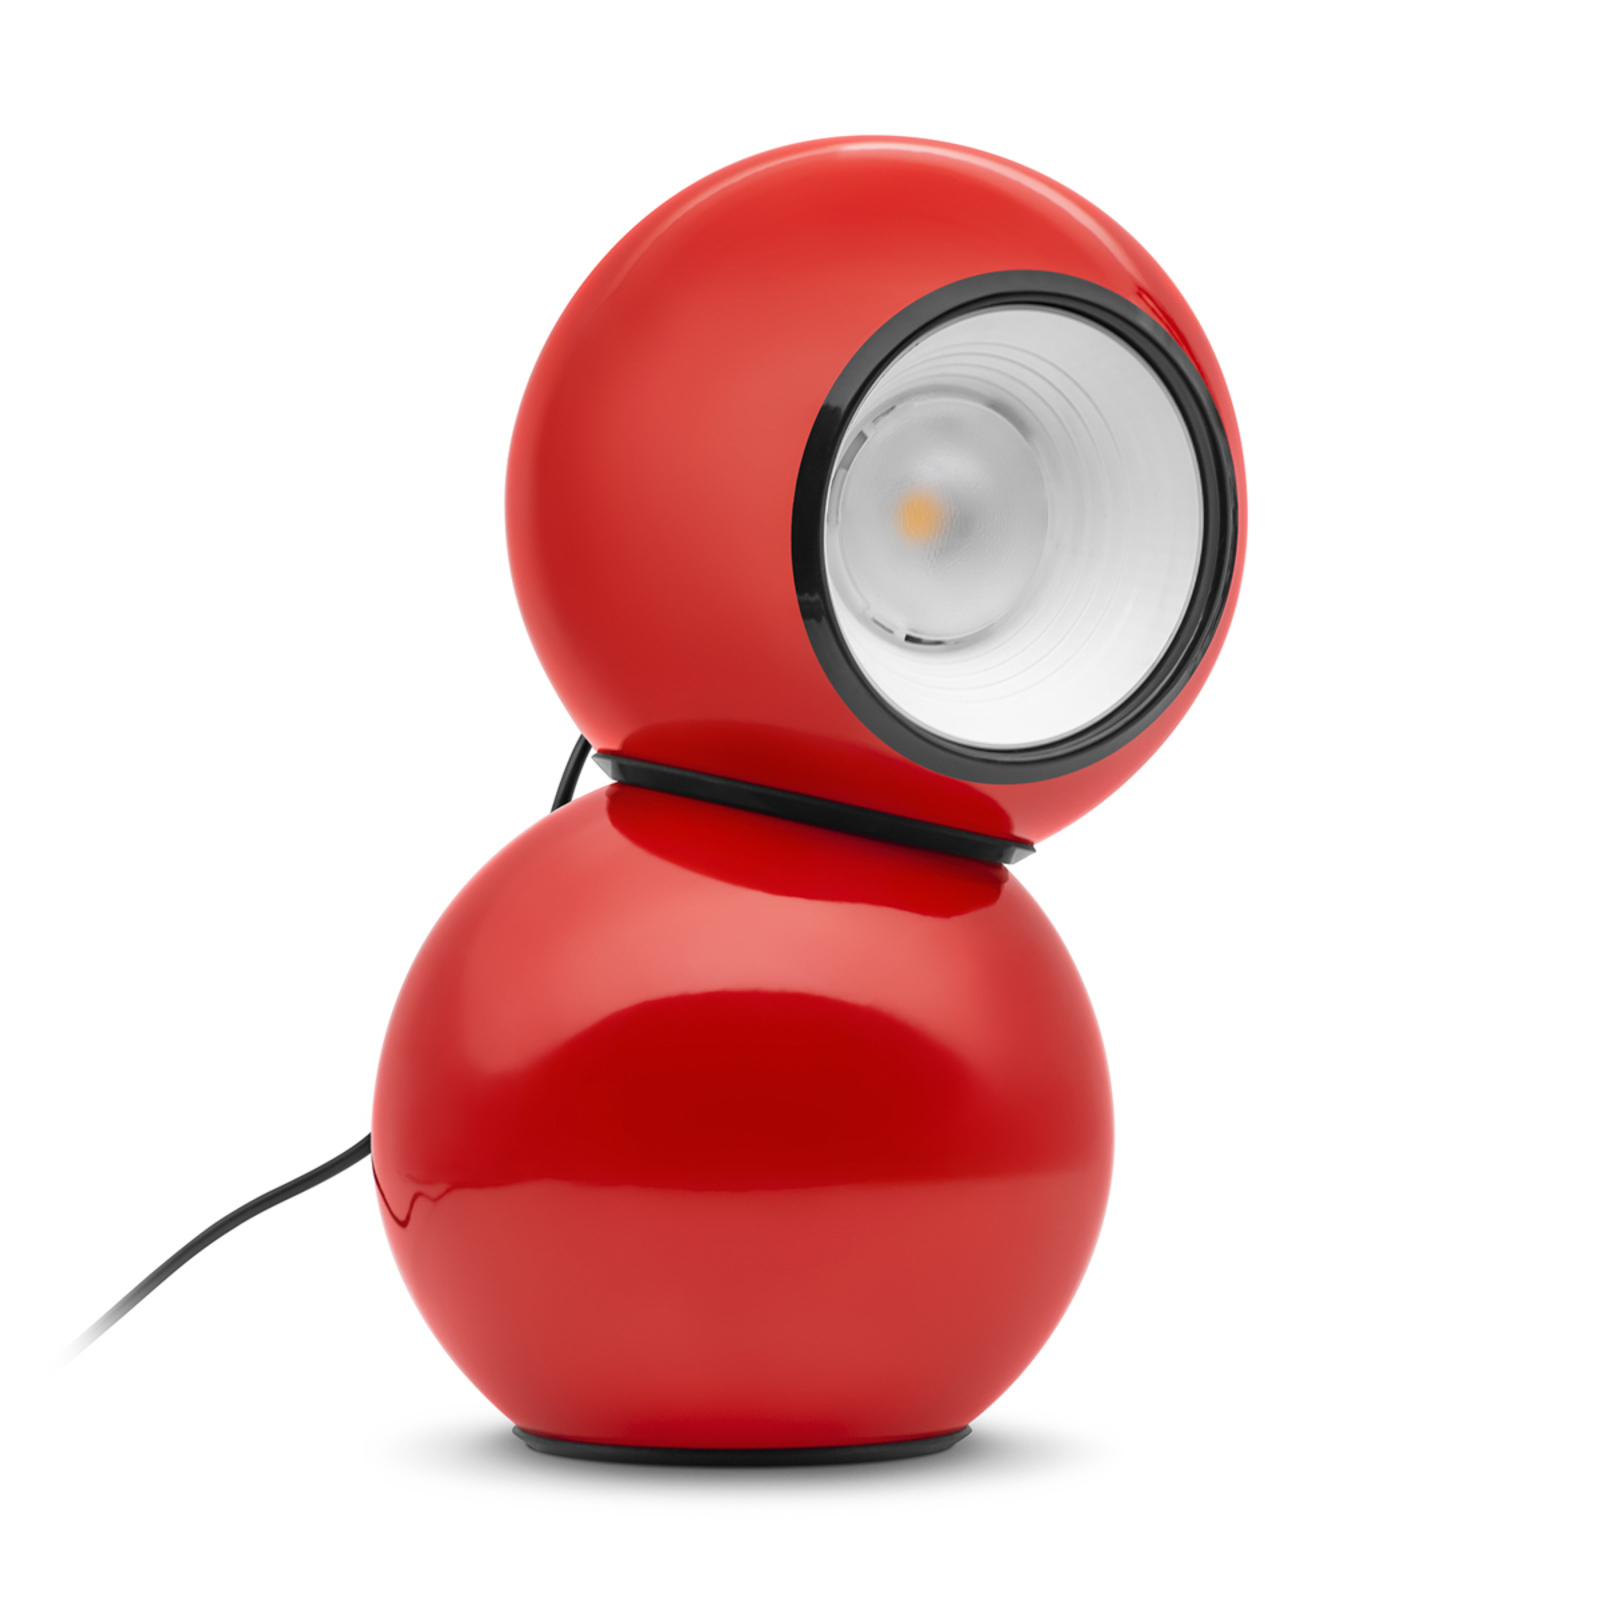 Stilnovo Gravitino lampe LED aimant, rouge